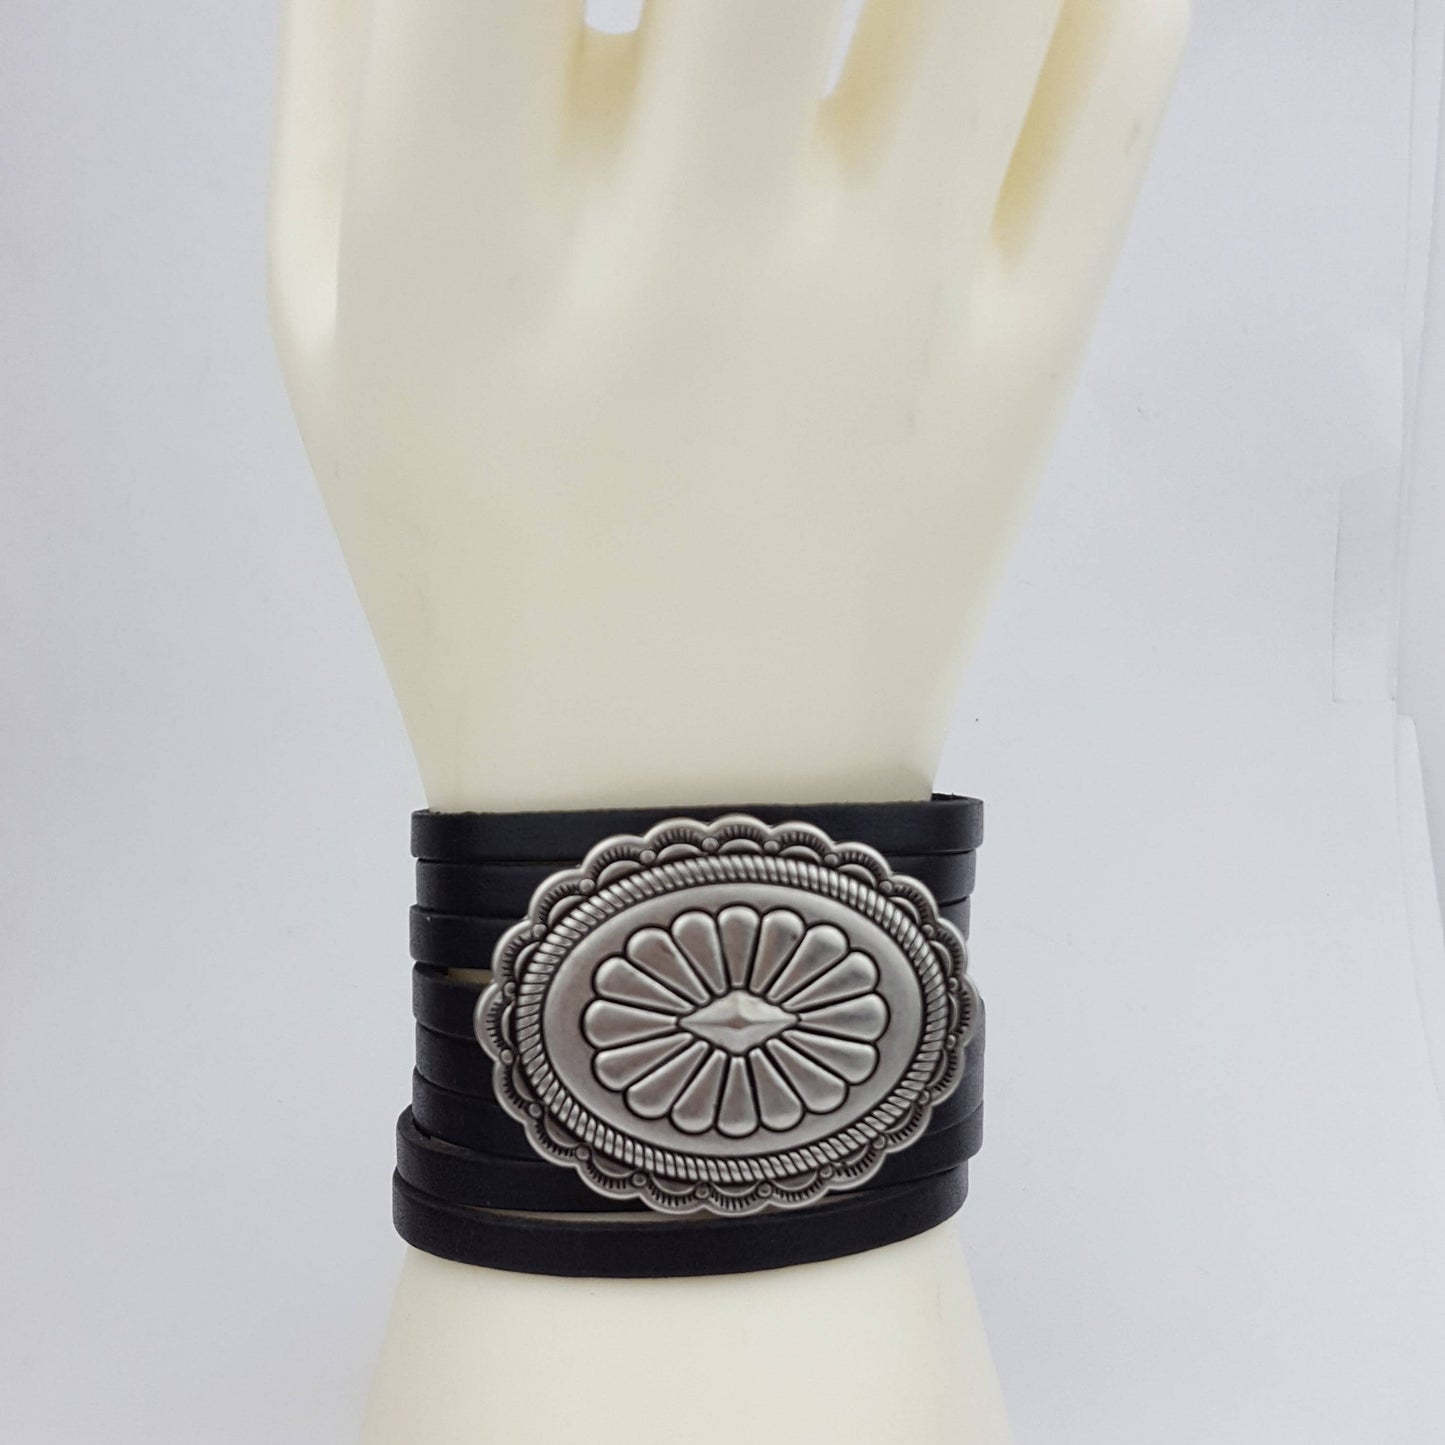 Genuine Leather Arm Cuff with Silver Concho - Black